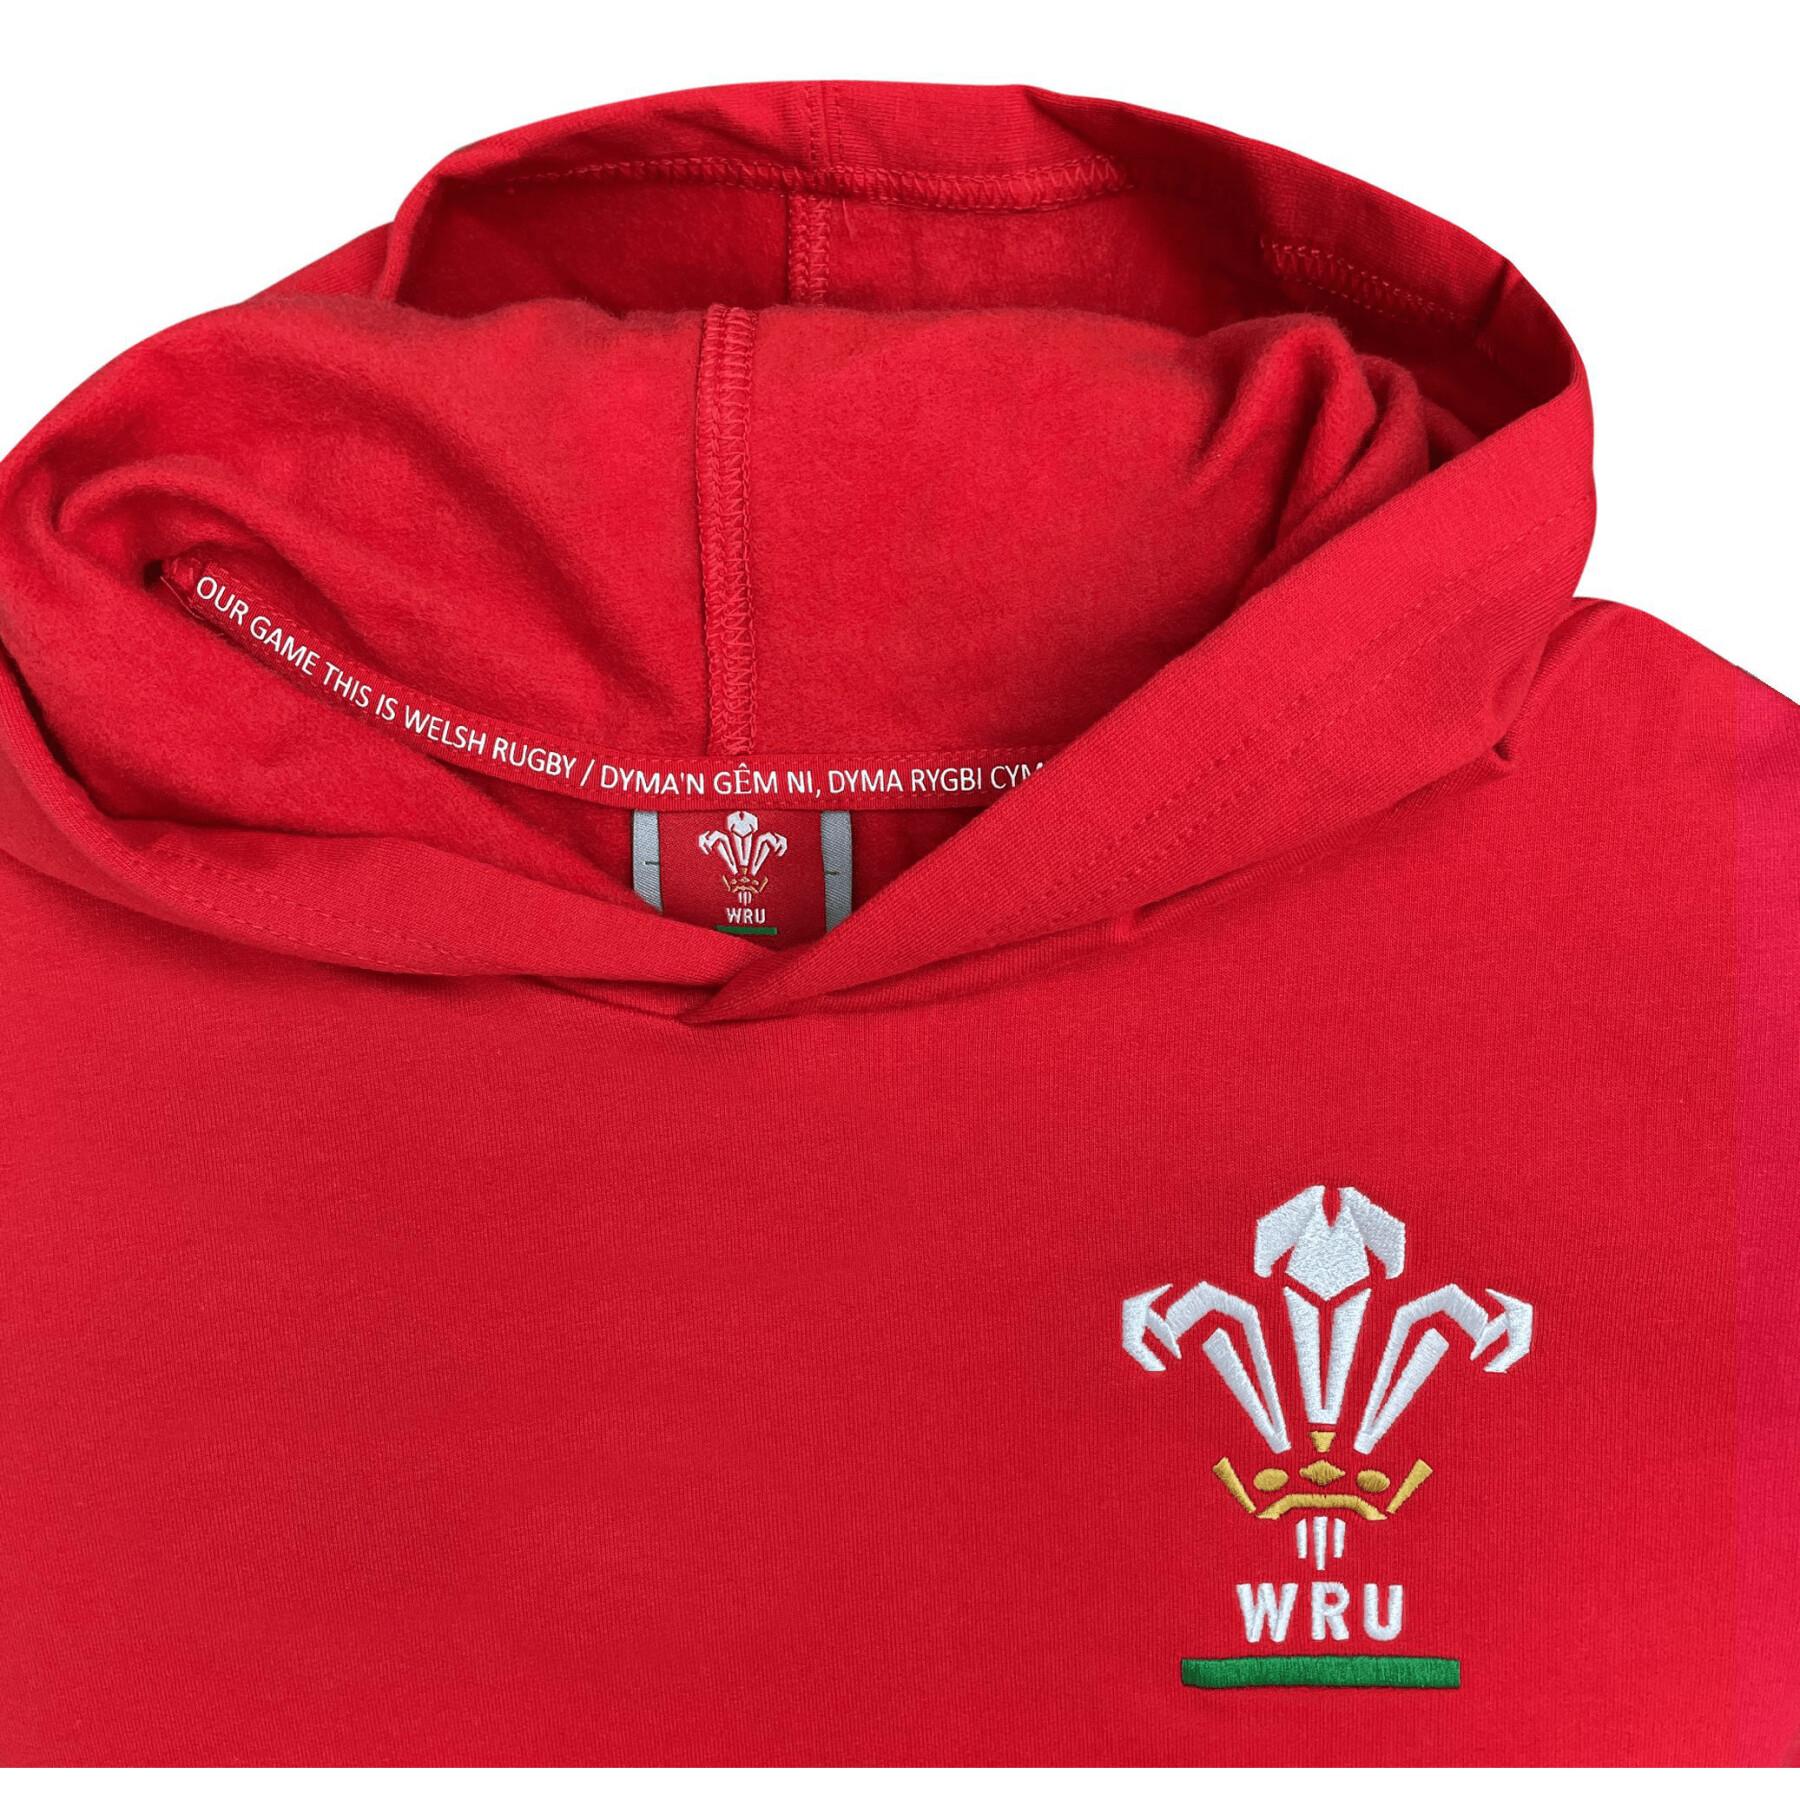 Camisola com capuz Pays de Galles Rugby XV Merch CA Groc